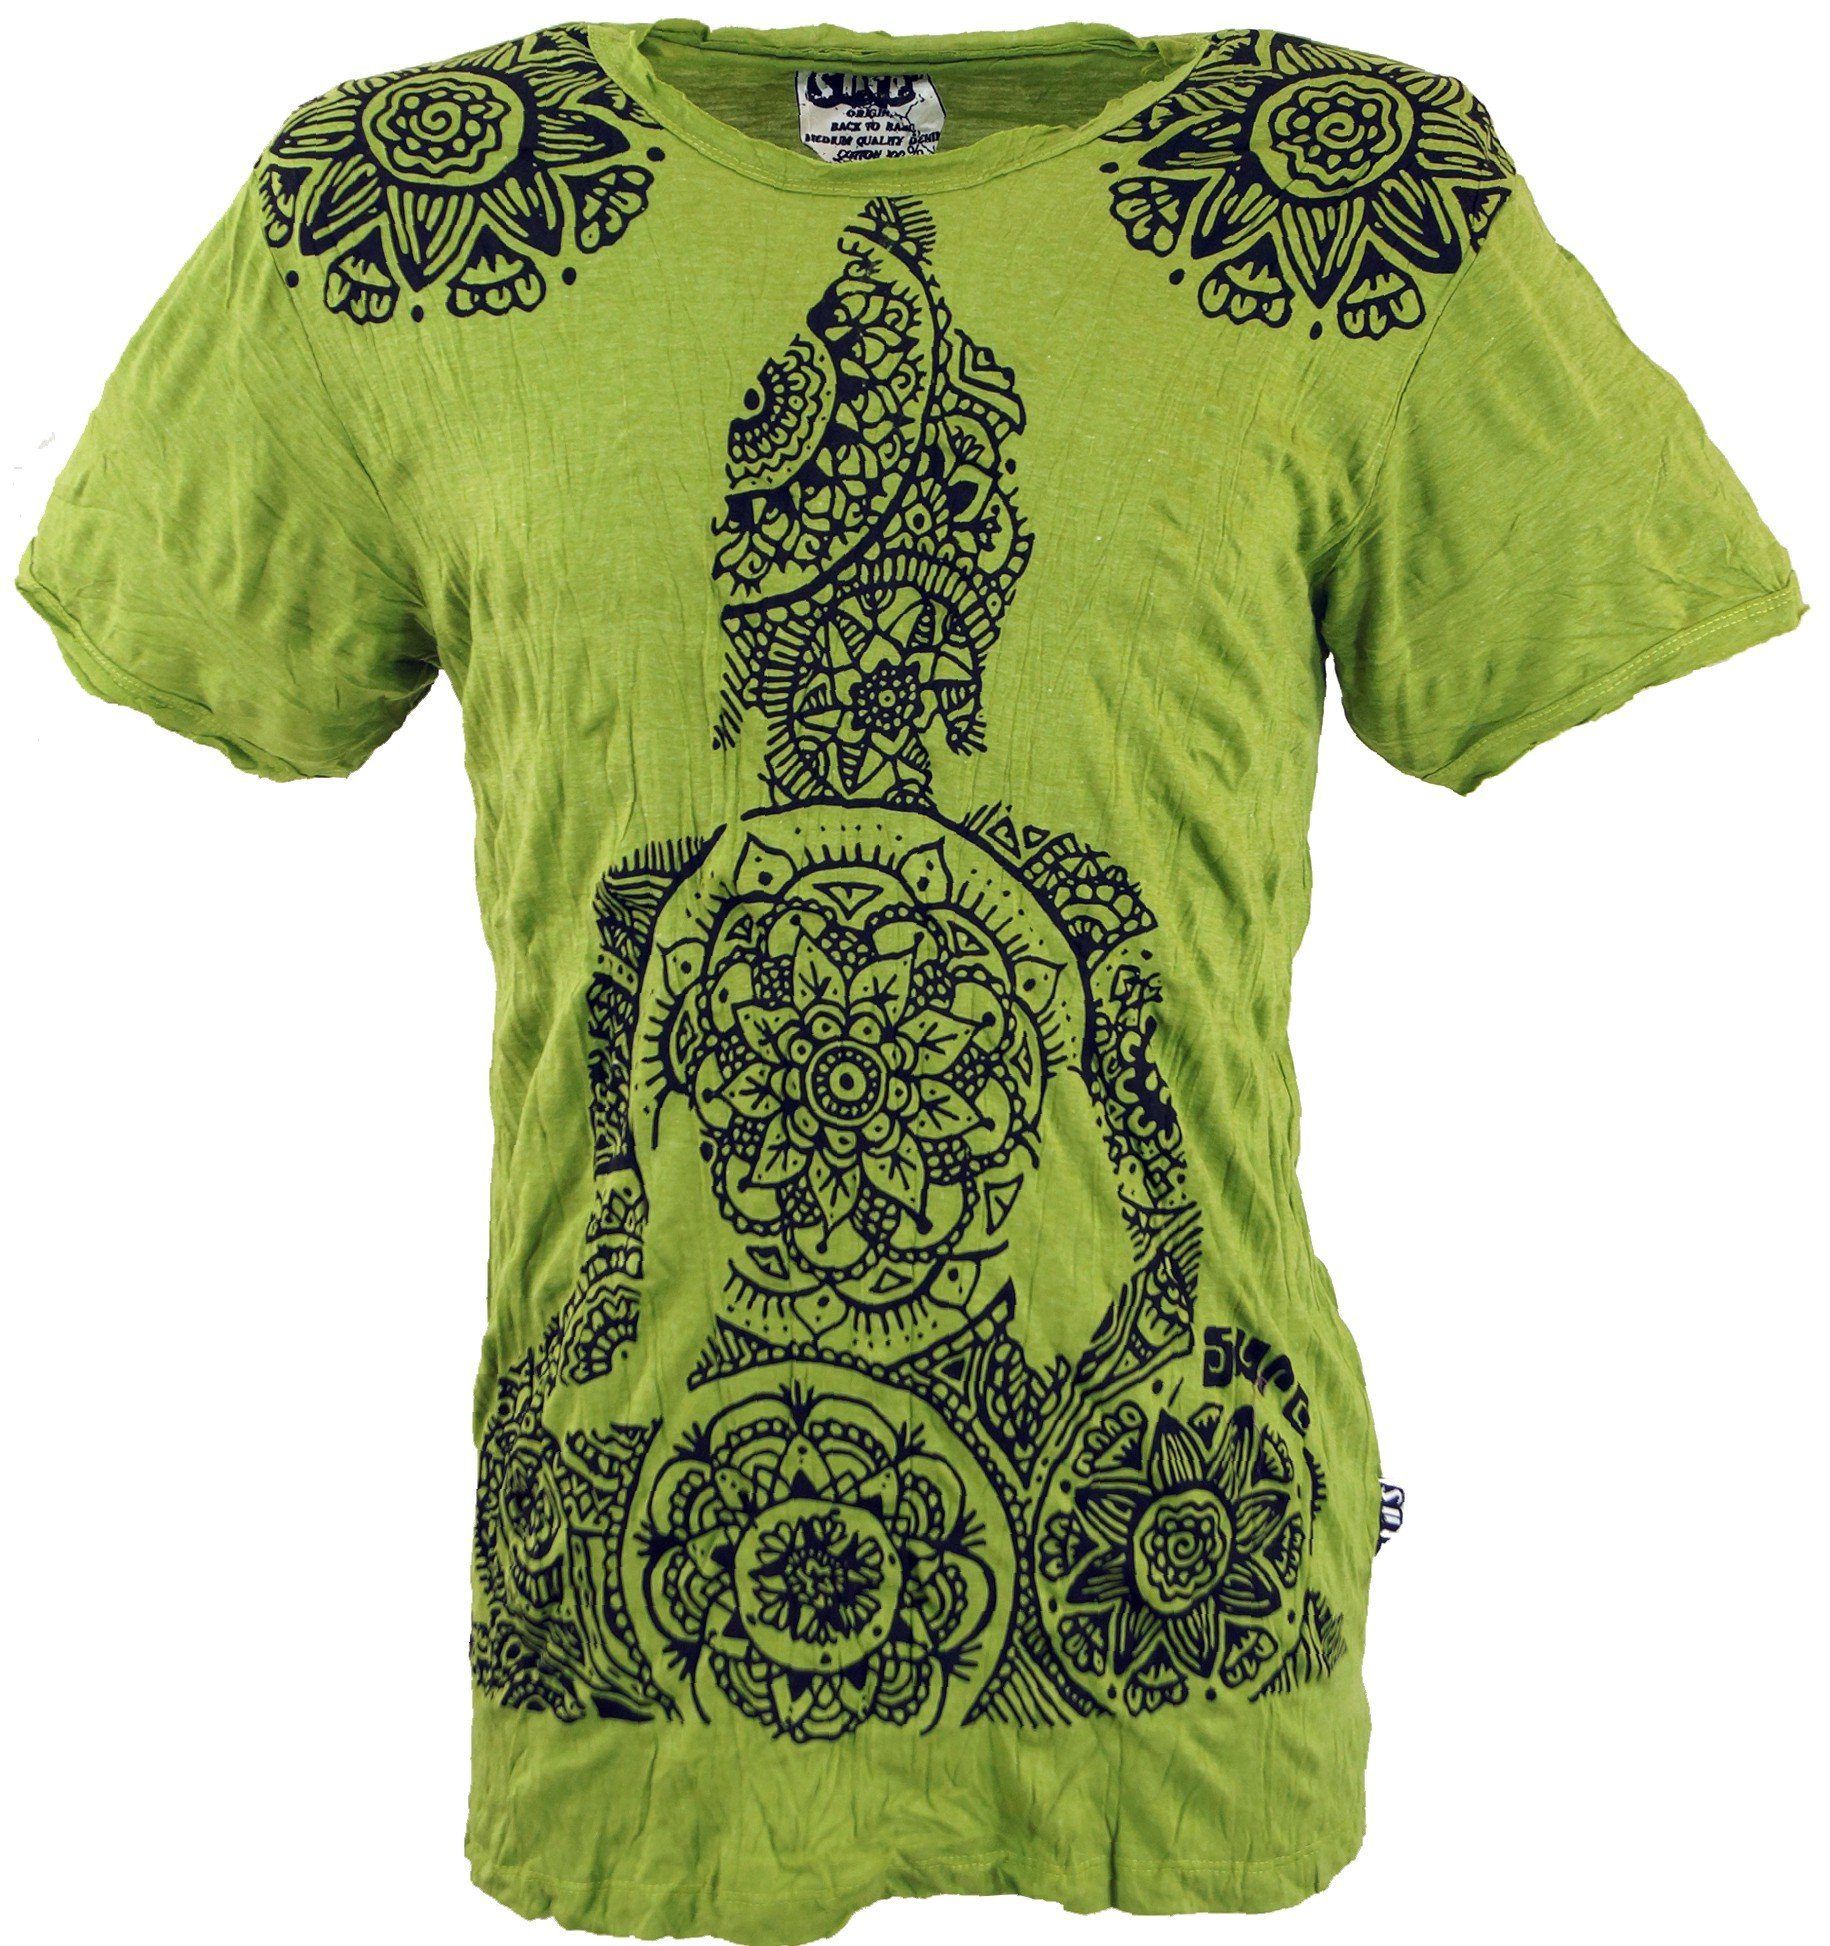 Guru-Shop T-Shirt Sure T-Shirt lemon Mandala Style, alternative Festival, Bekleidung - Buddha Goa